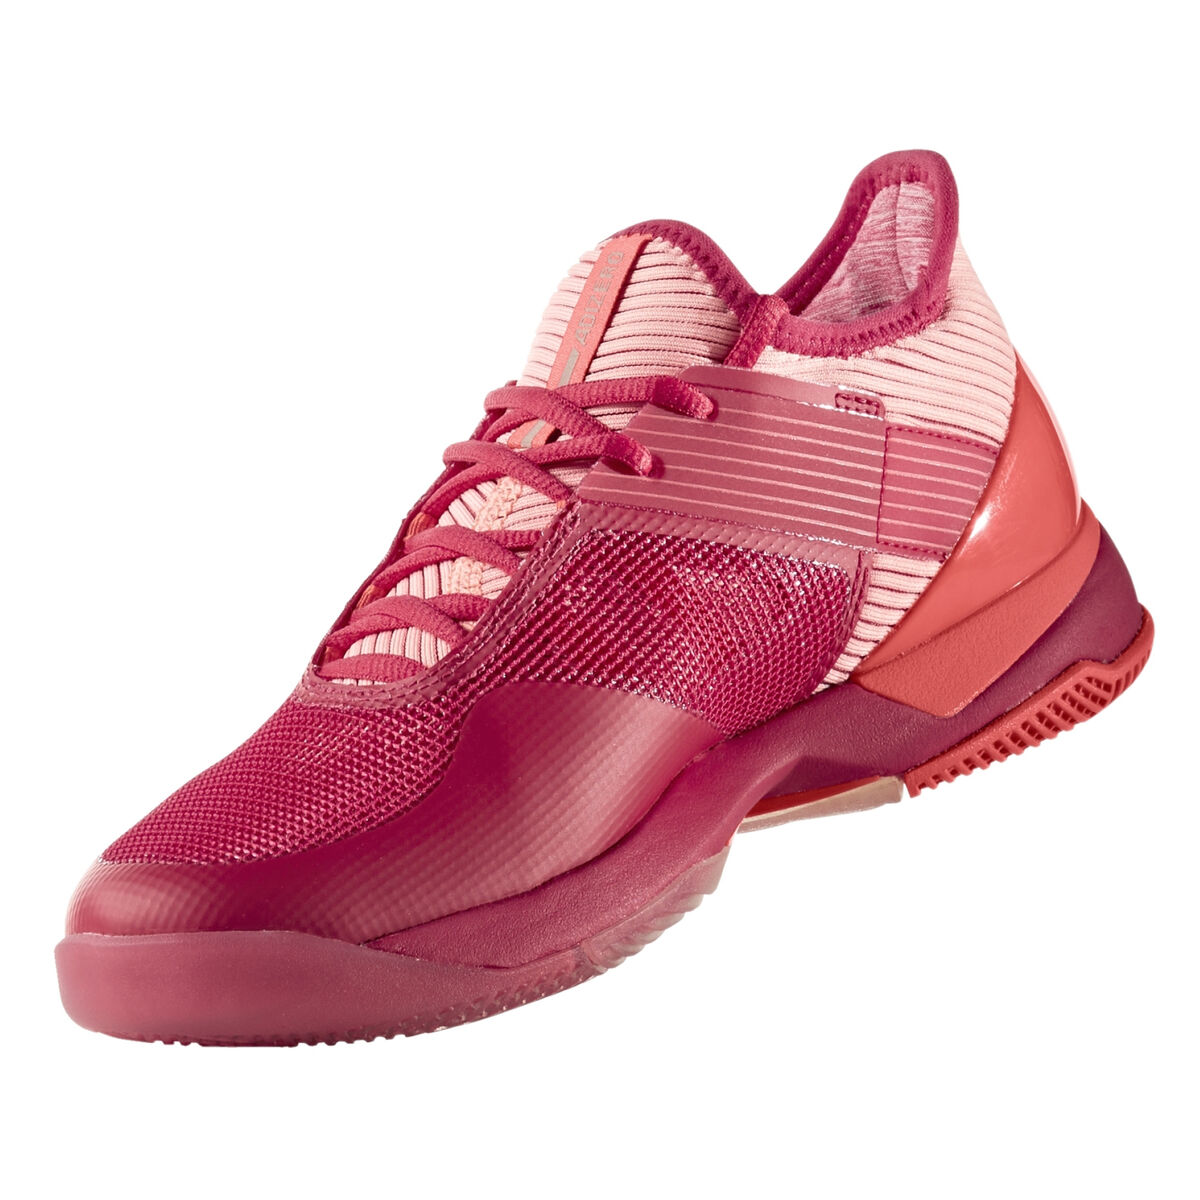 Adidas Adizero Ubersonic 3 Womens Tennis Shoes Pink Pga Tour Superstore 9370